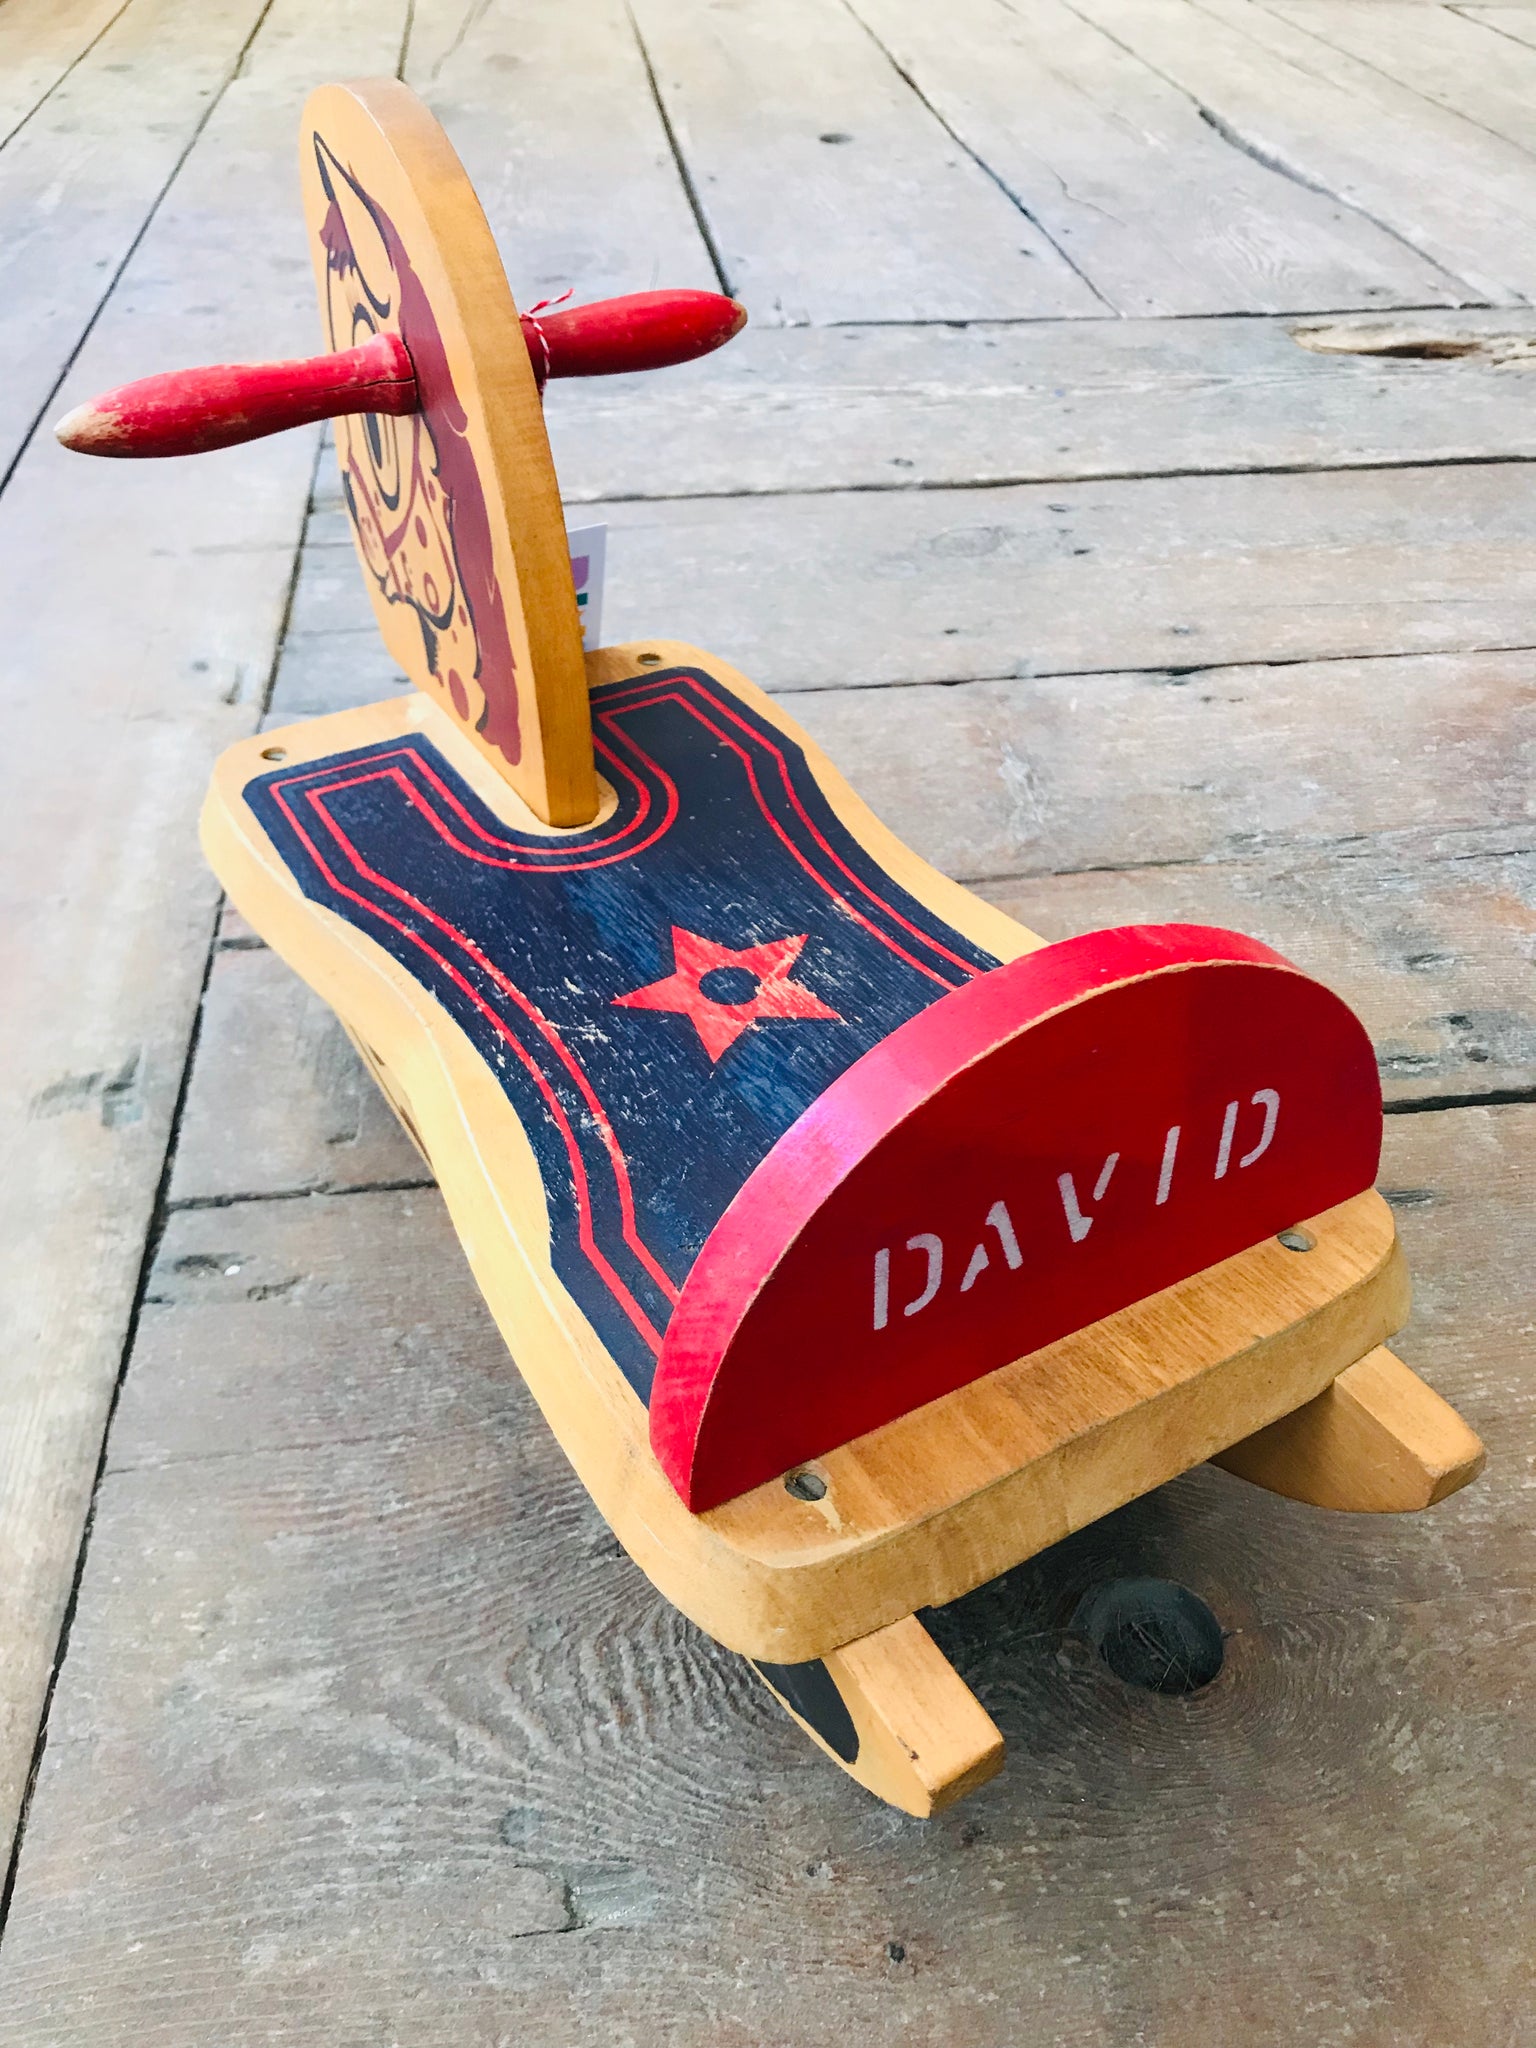 David’s Dog Rocking Horse